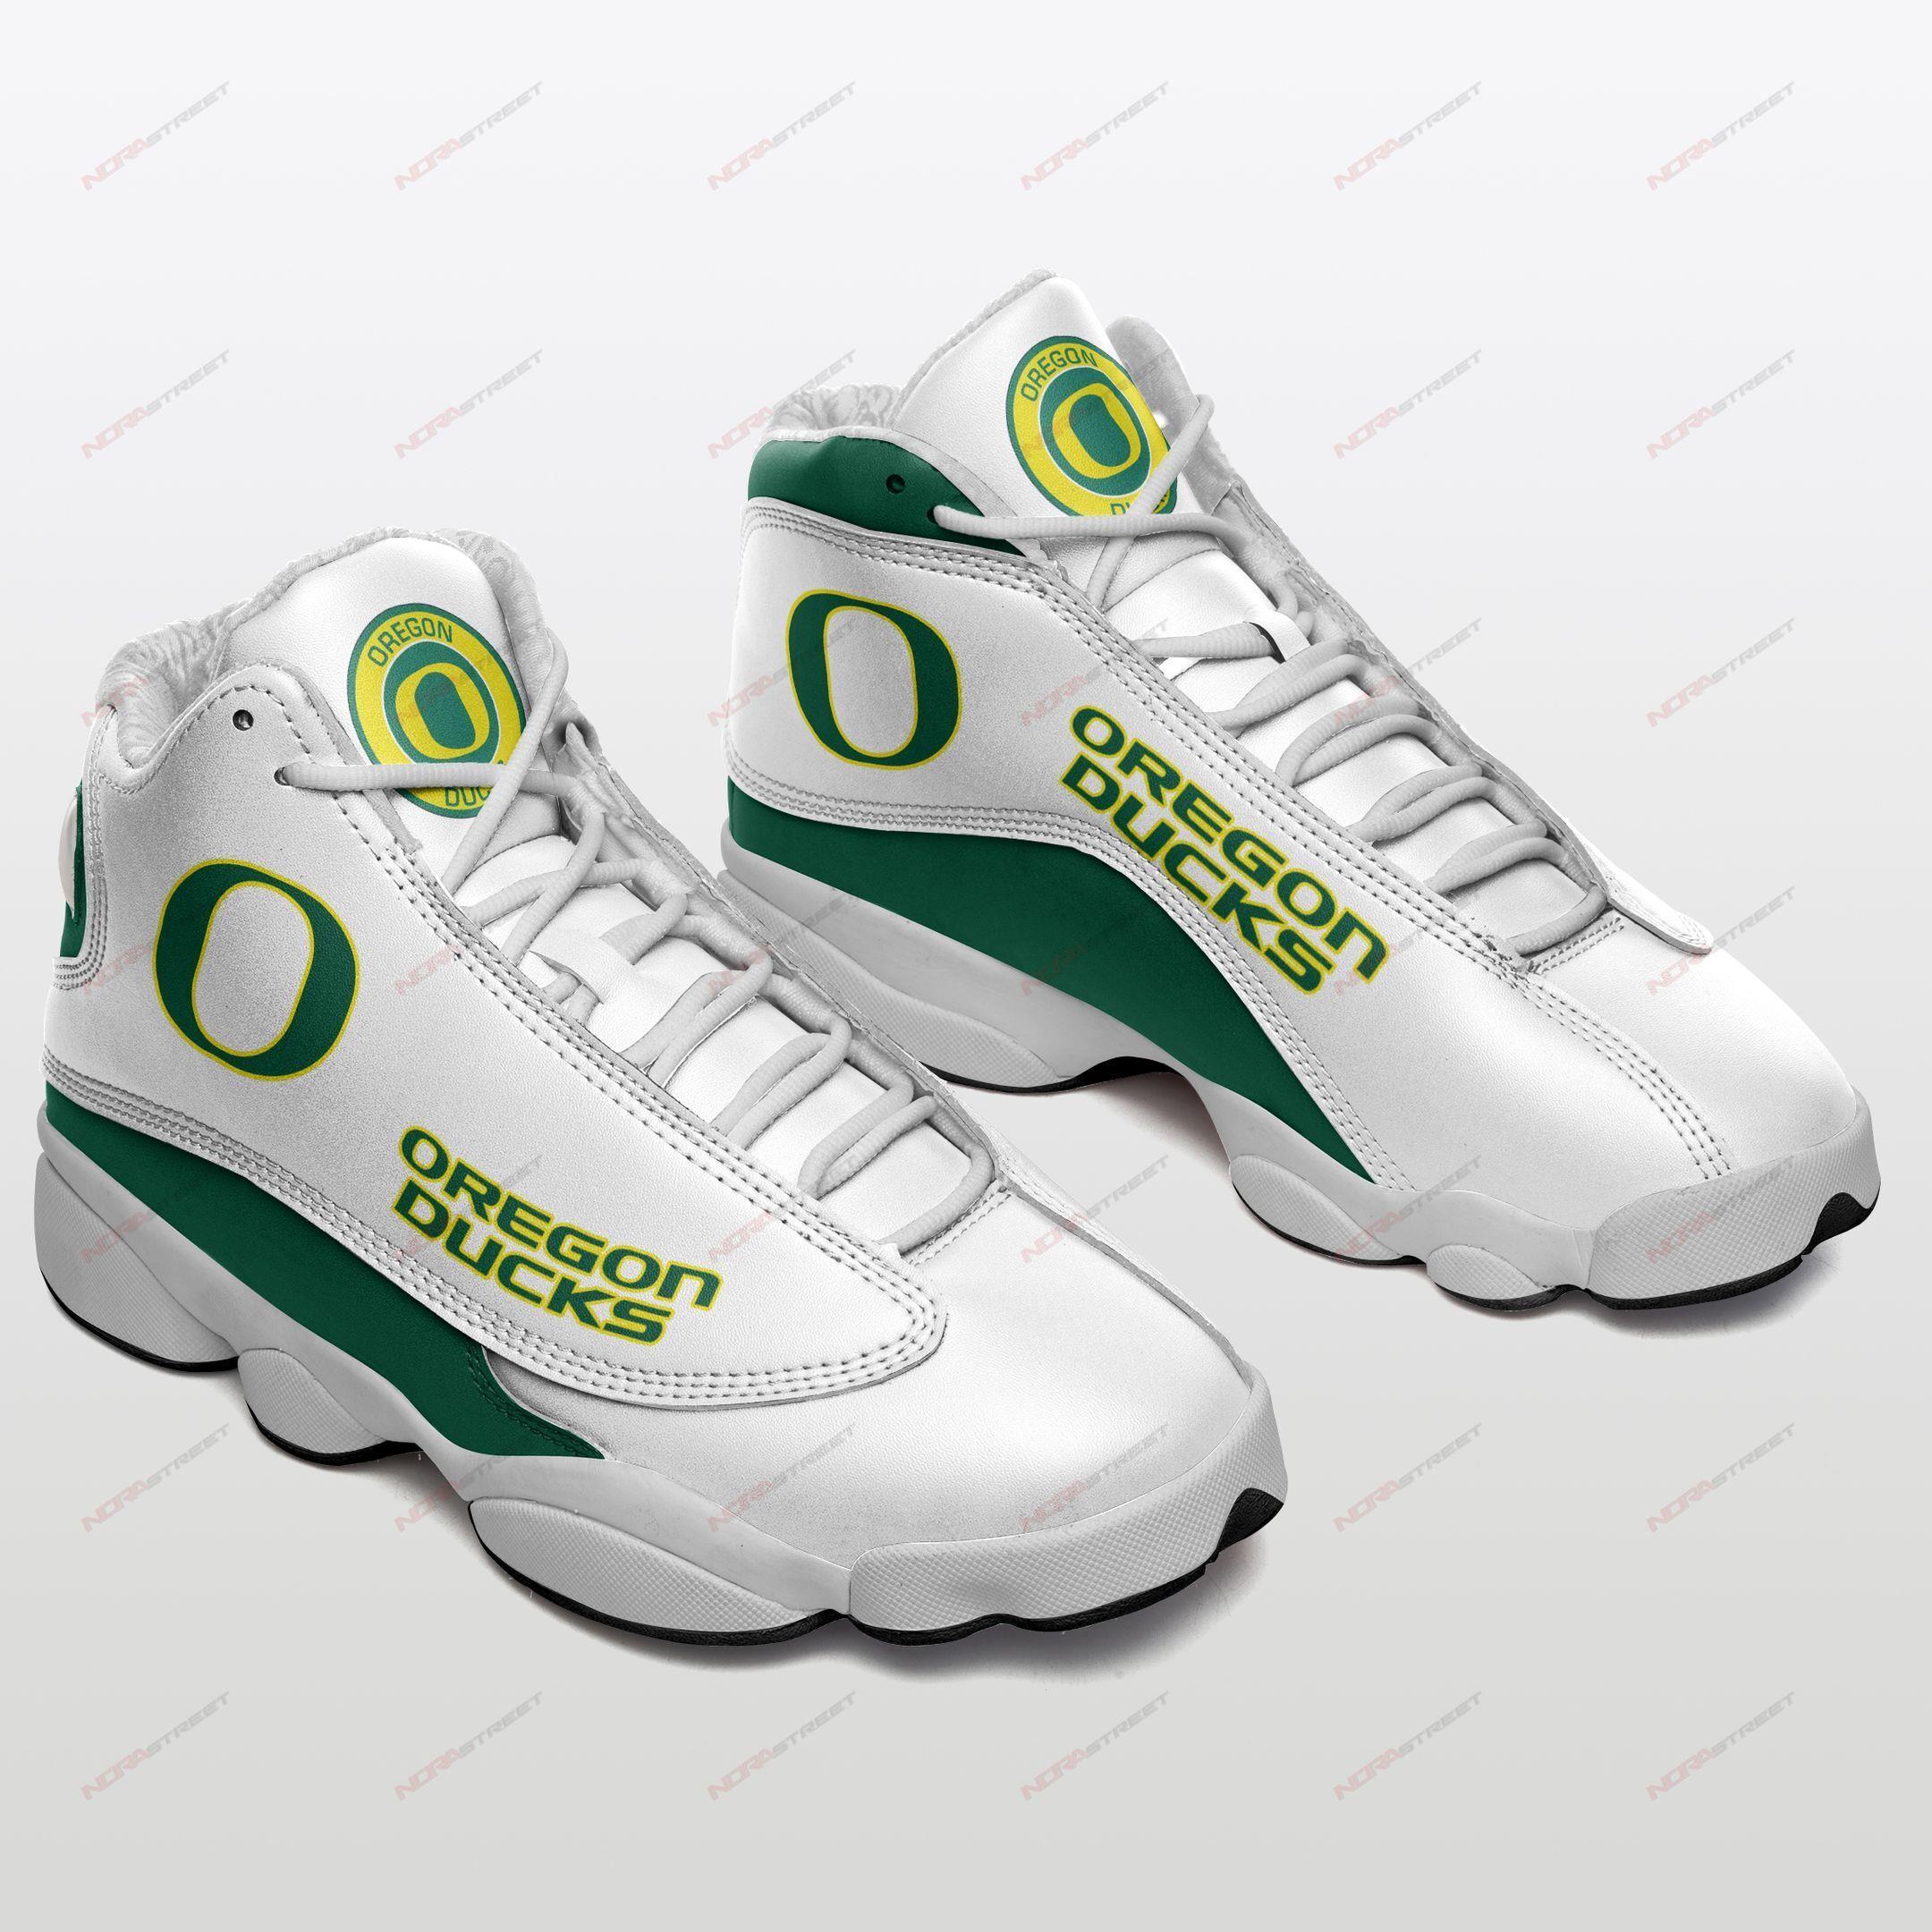 Oregon Ducks Air Jordan 13 Sneakers Sport Shoes Full Size